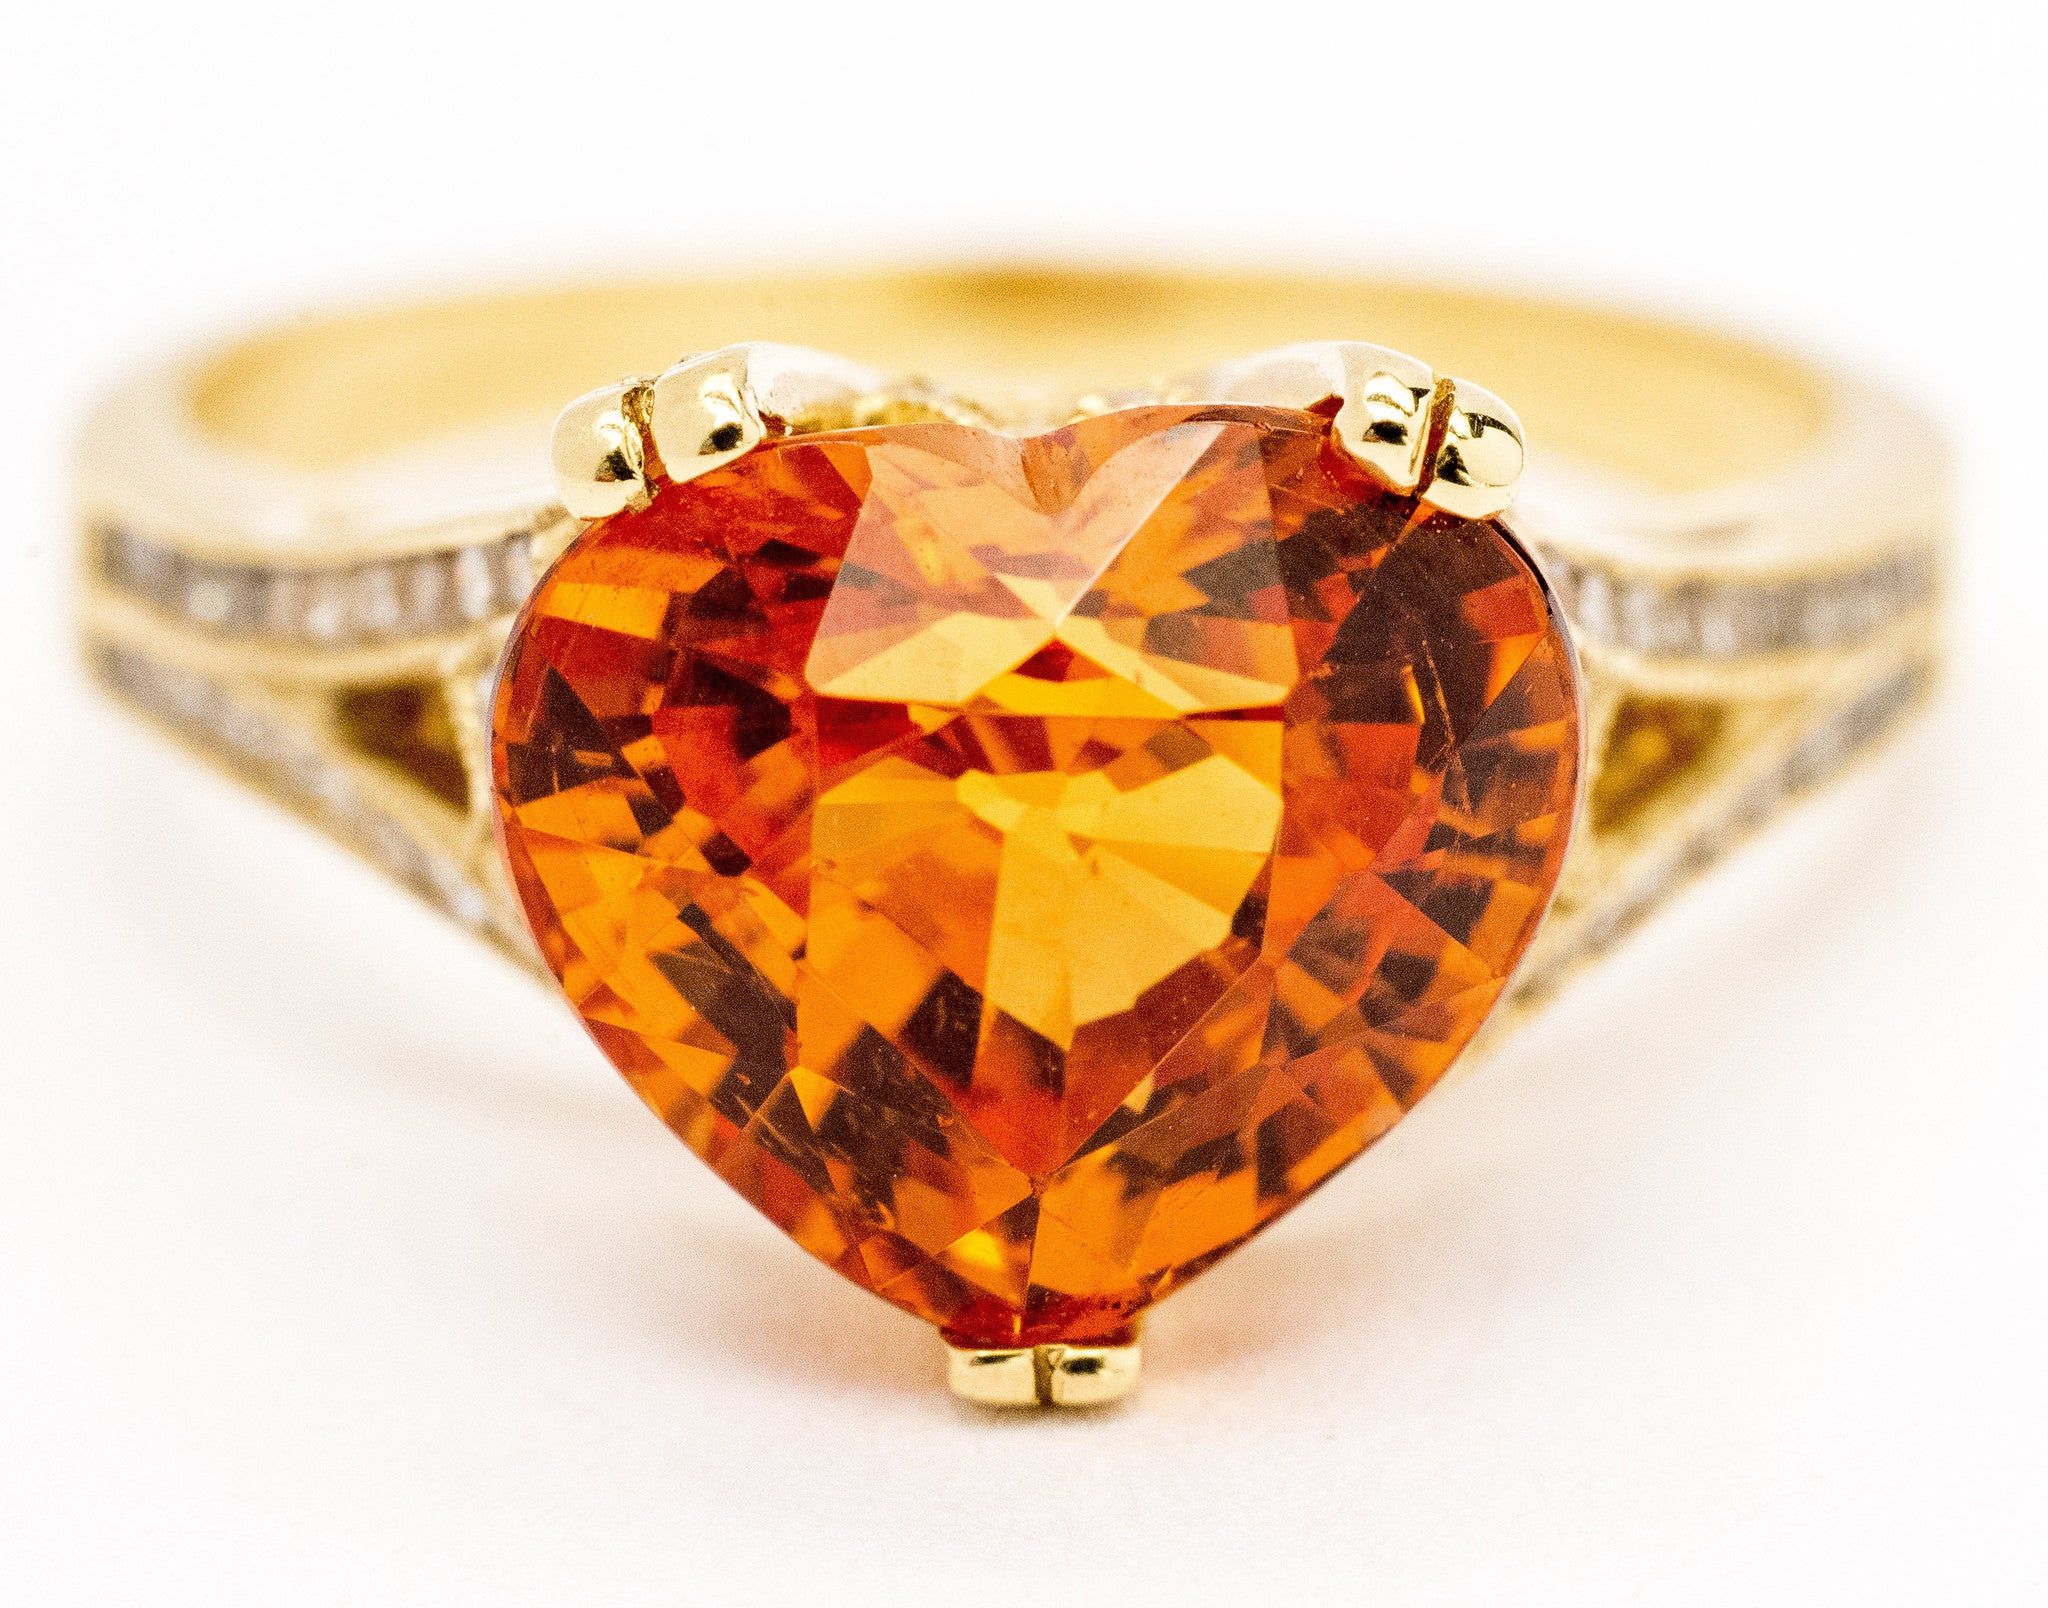 Heart Cut Engagement Ring, Buy Online Heart Cut Engagement Ring – Eurekalook